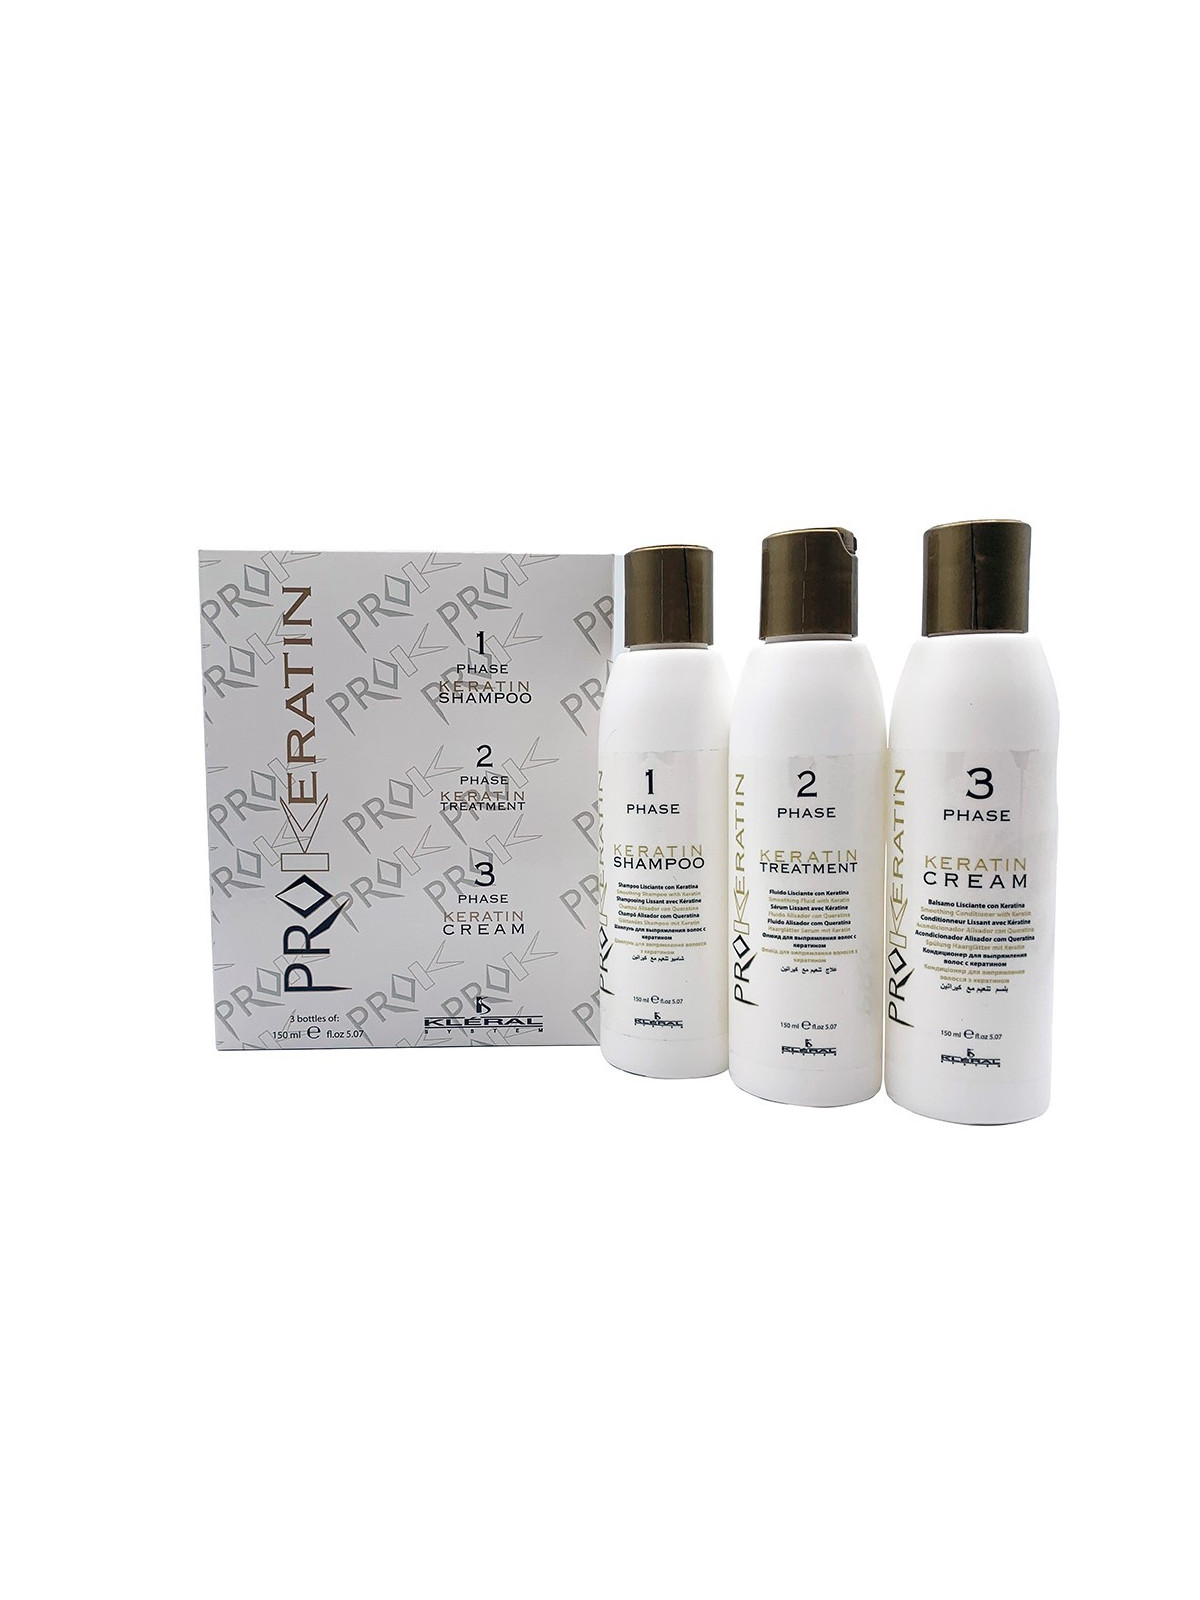 Kléral Pro keratin kit shampoo trattamento e crema da 150 ml21,00 €